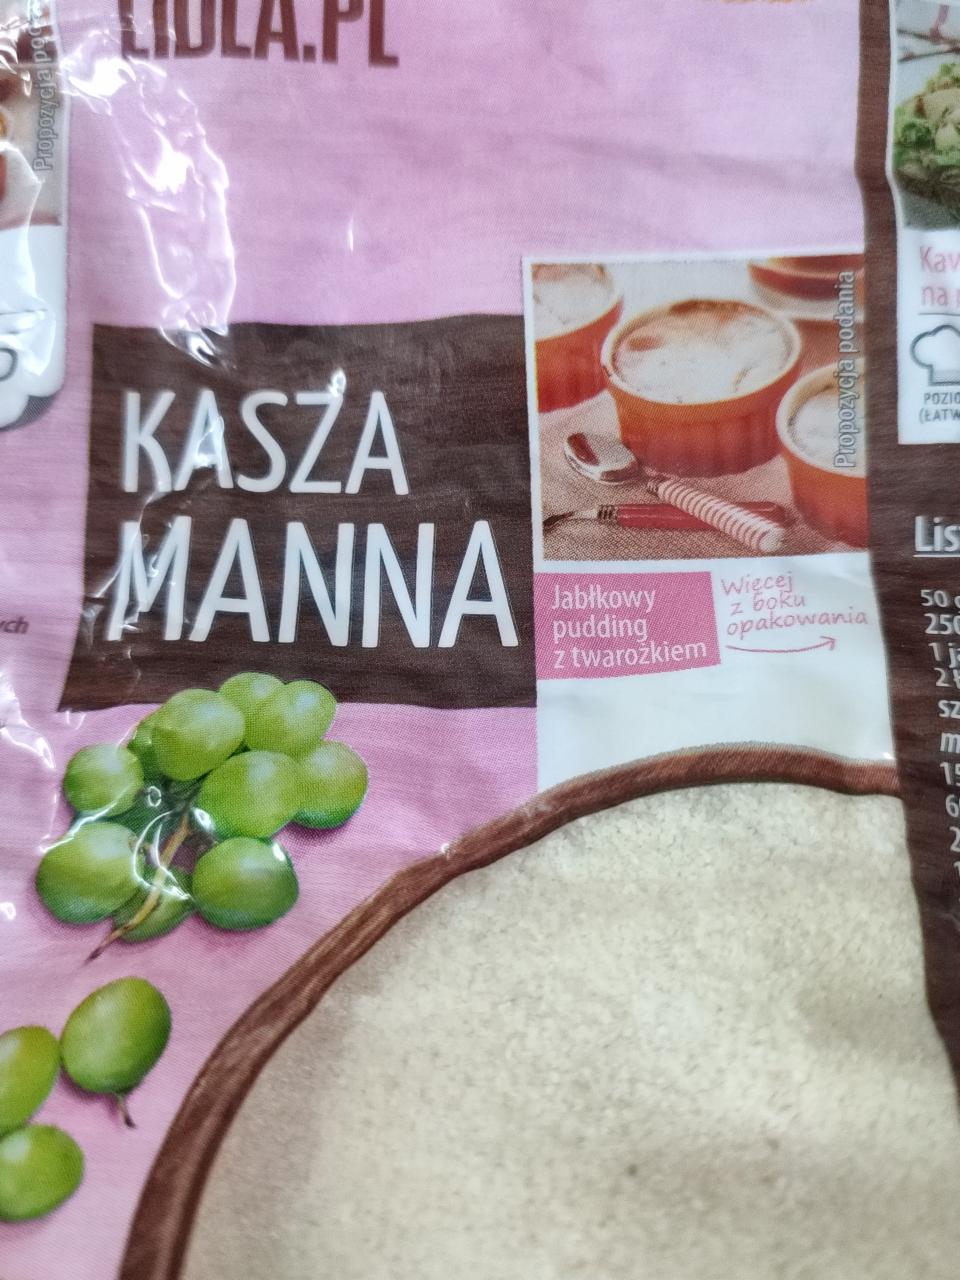 Zdjęcia - Kasza manna kuchnia Lidla.pl